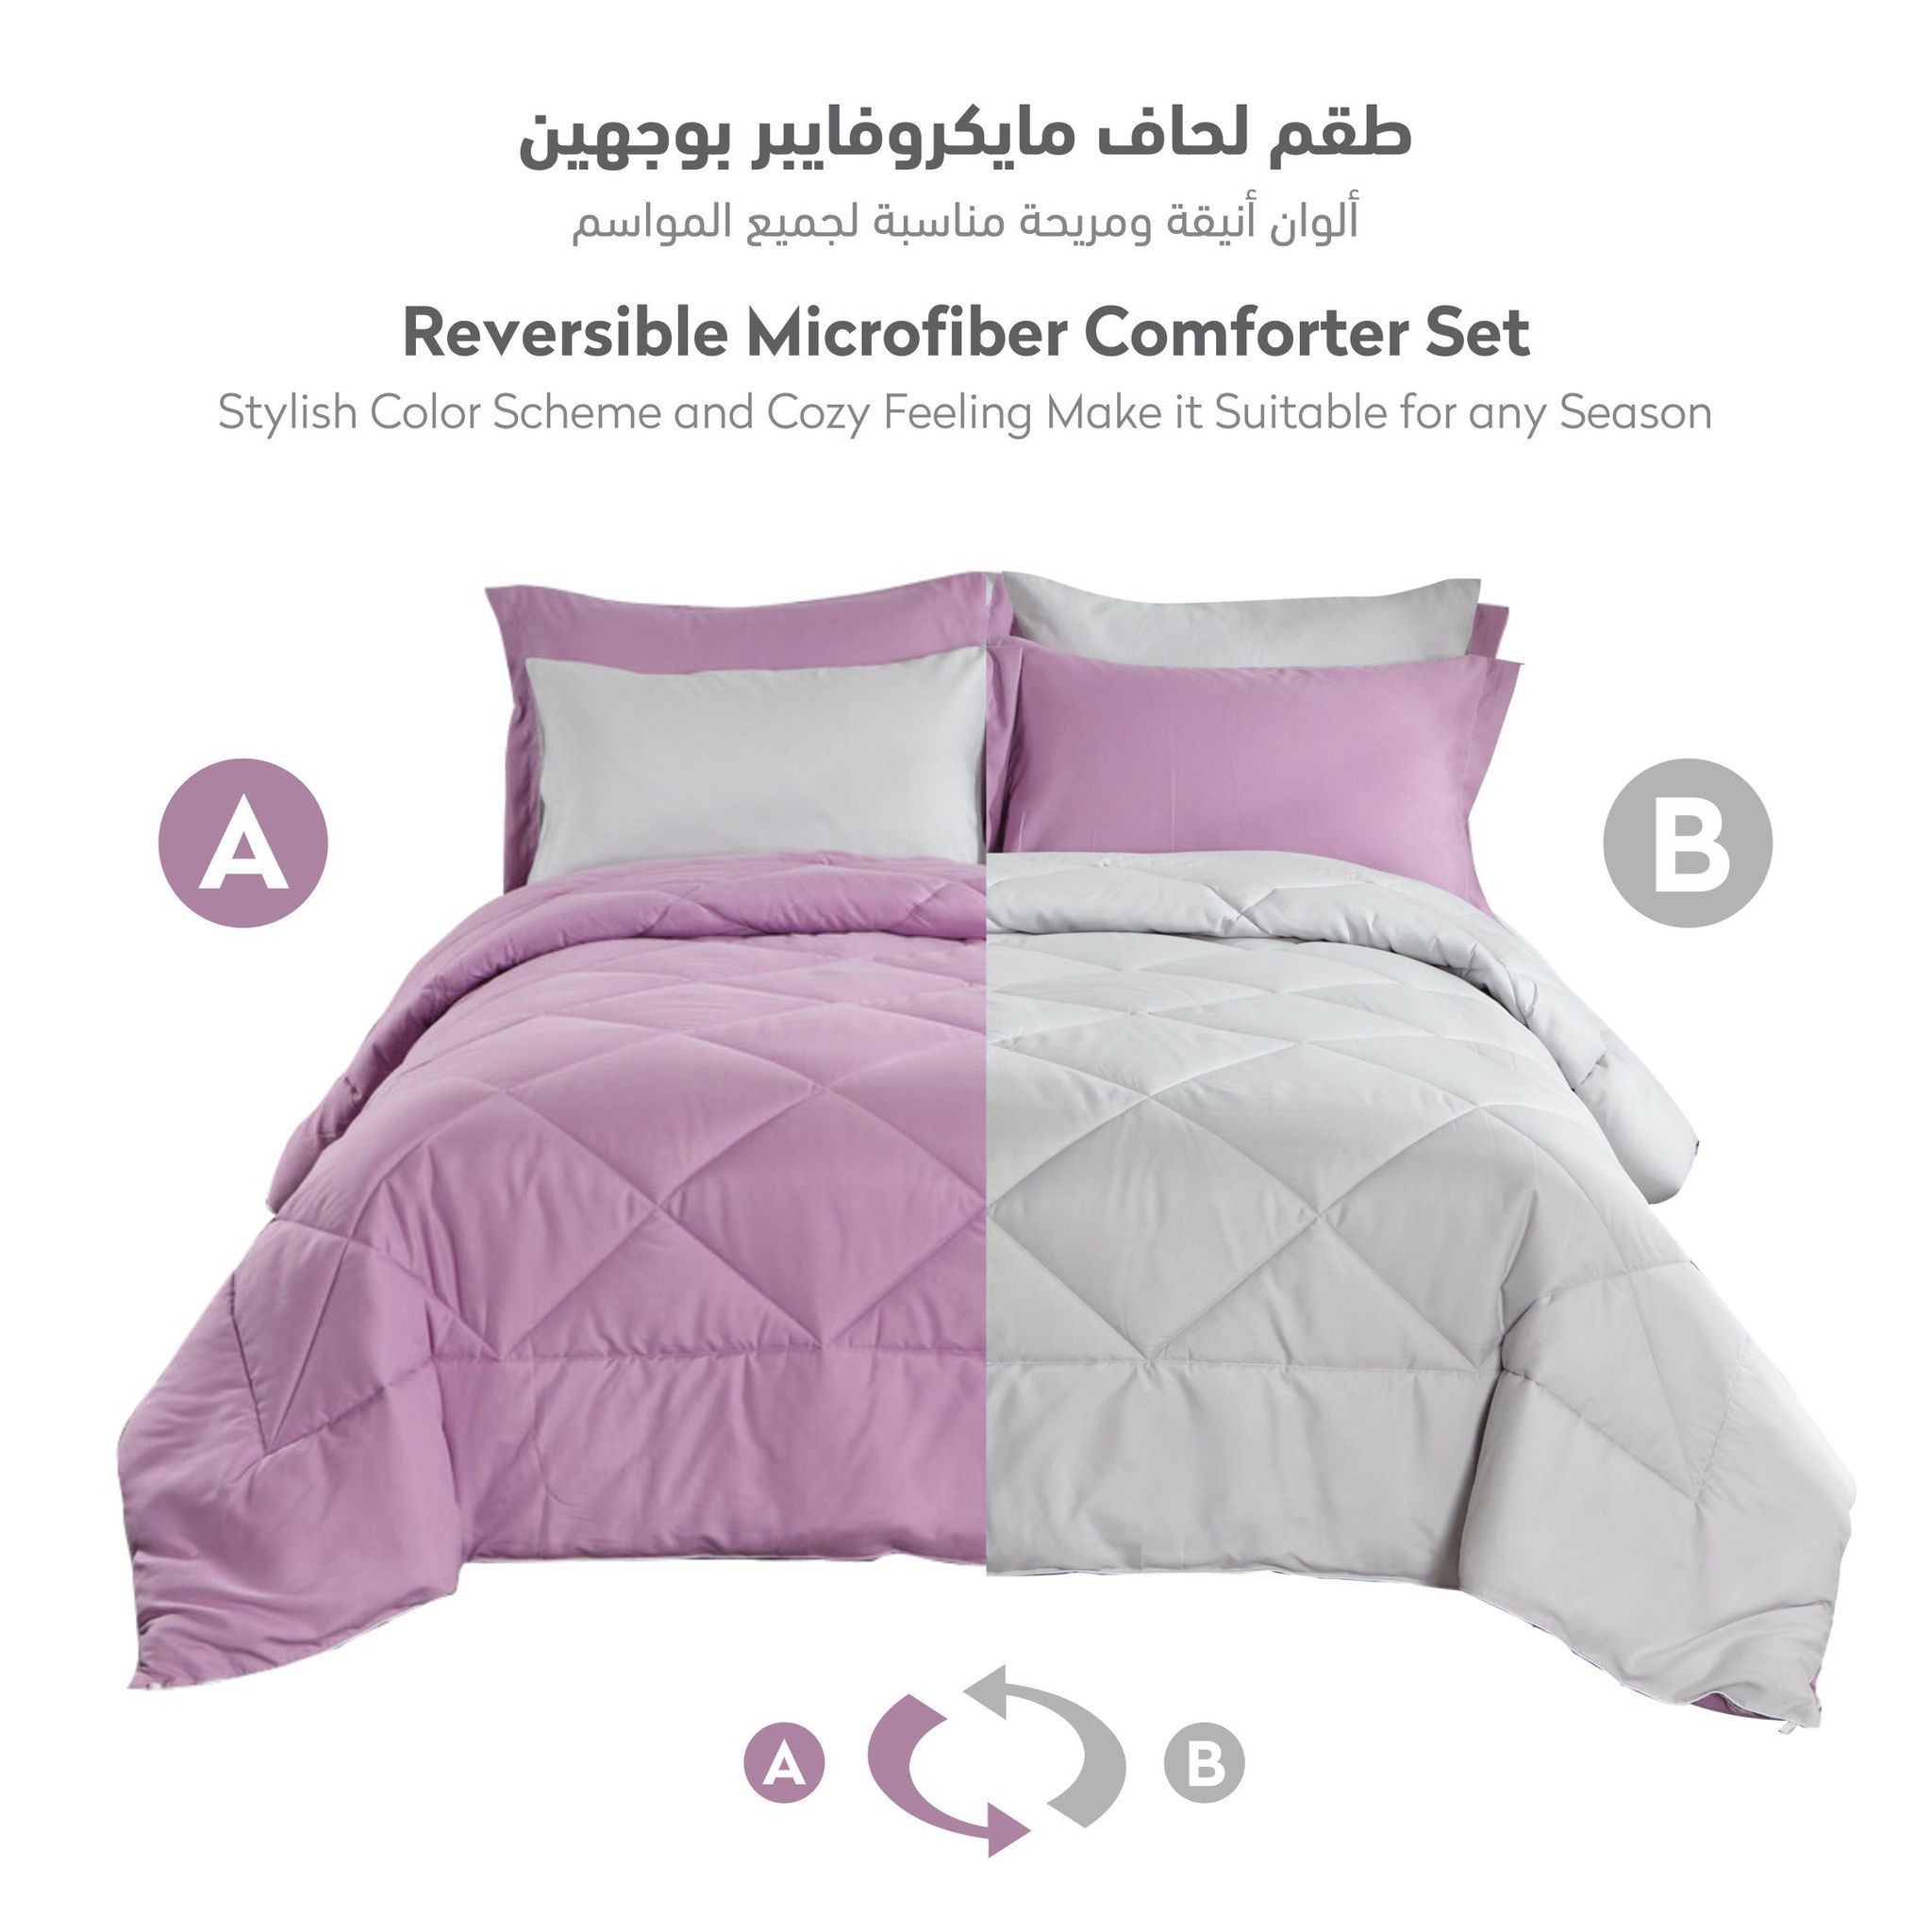 Diamond Quilted Reversible Comforter Set 4-Piece Twin Pink/Light Grey